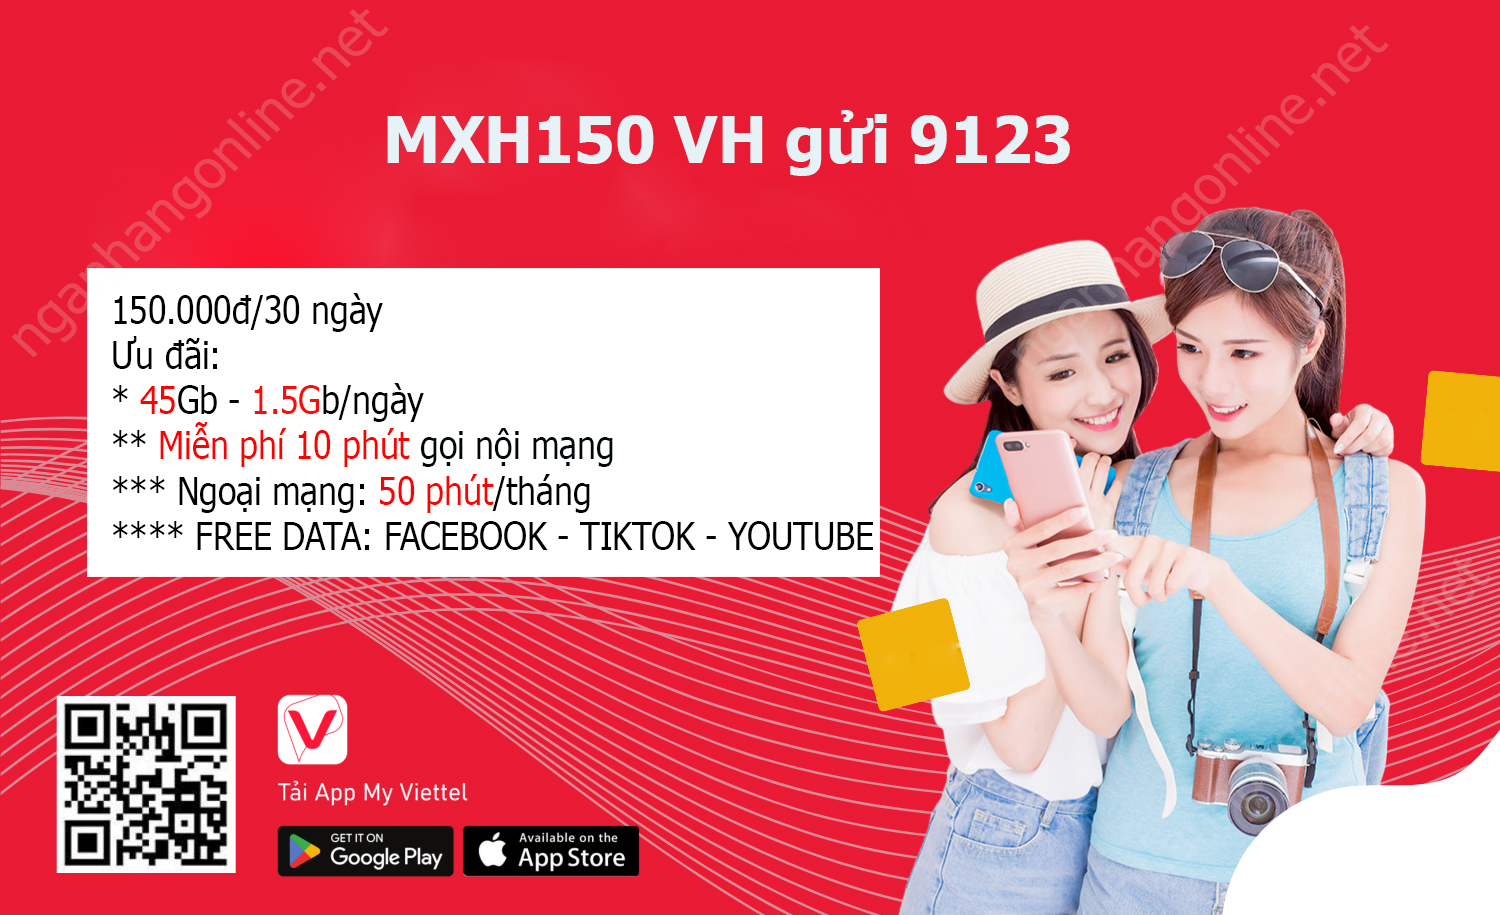 Gói cước MXH150 Viettel miễn phí truy cập Tiktok, Facebook, Youtube chỉ 150k/tháng